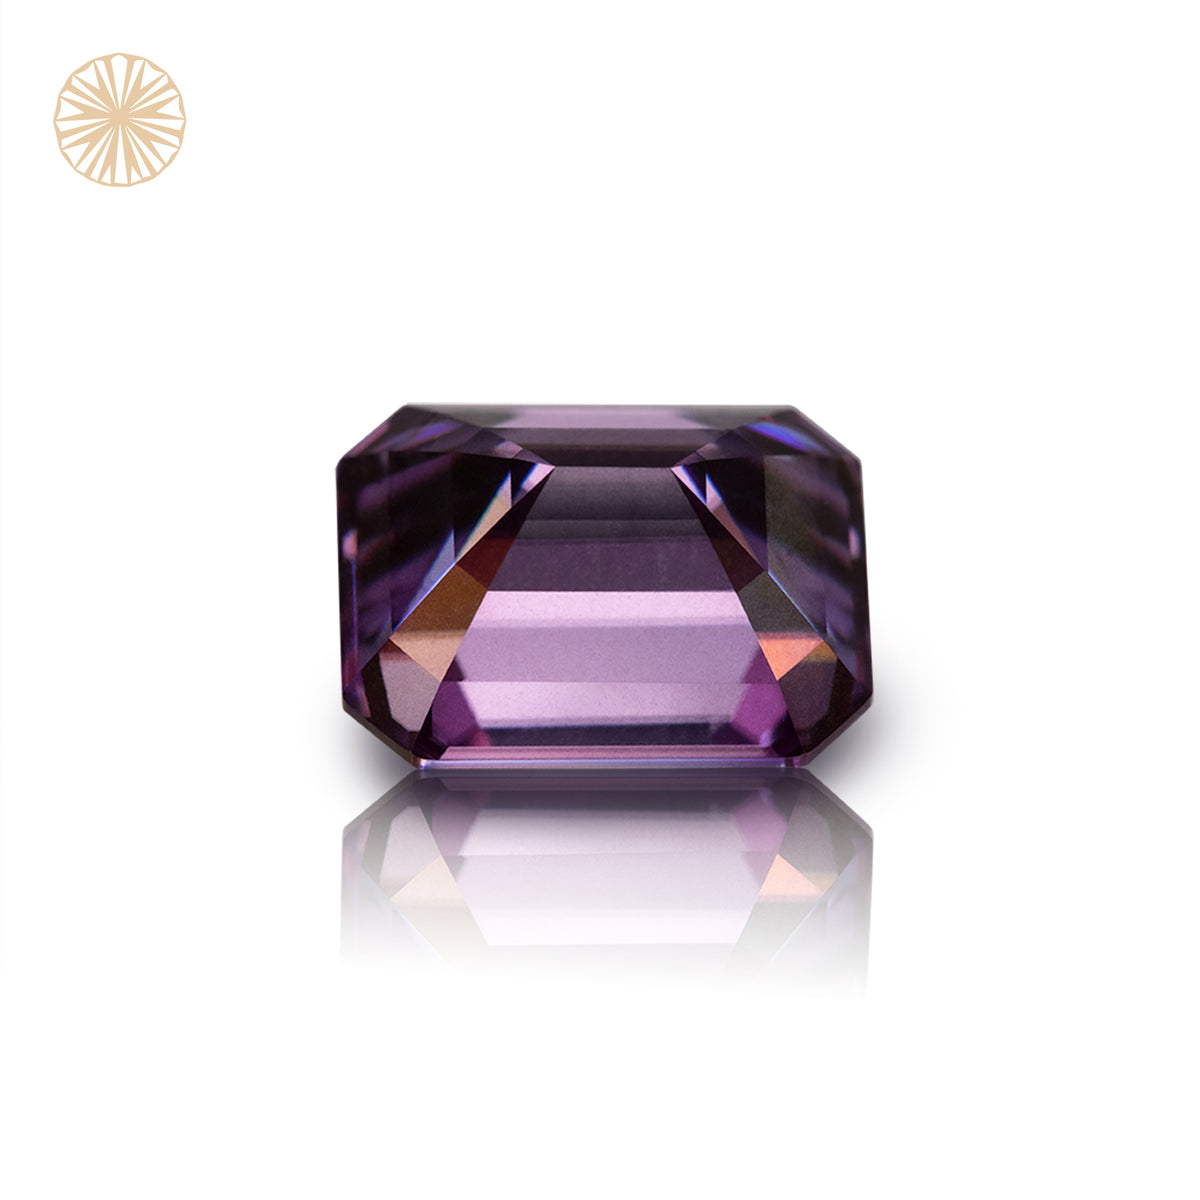 Royal Purple Emerald Cut Octangle Shape Moissanite Diamond Loose Gemstones GRA Certified Vivid Purple VVS1 Moissanite Fancy Cut for Jewelry Making